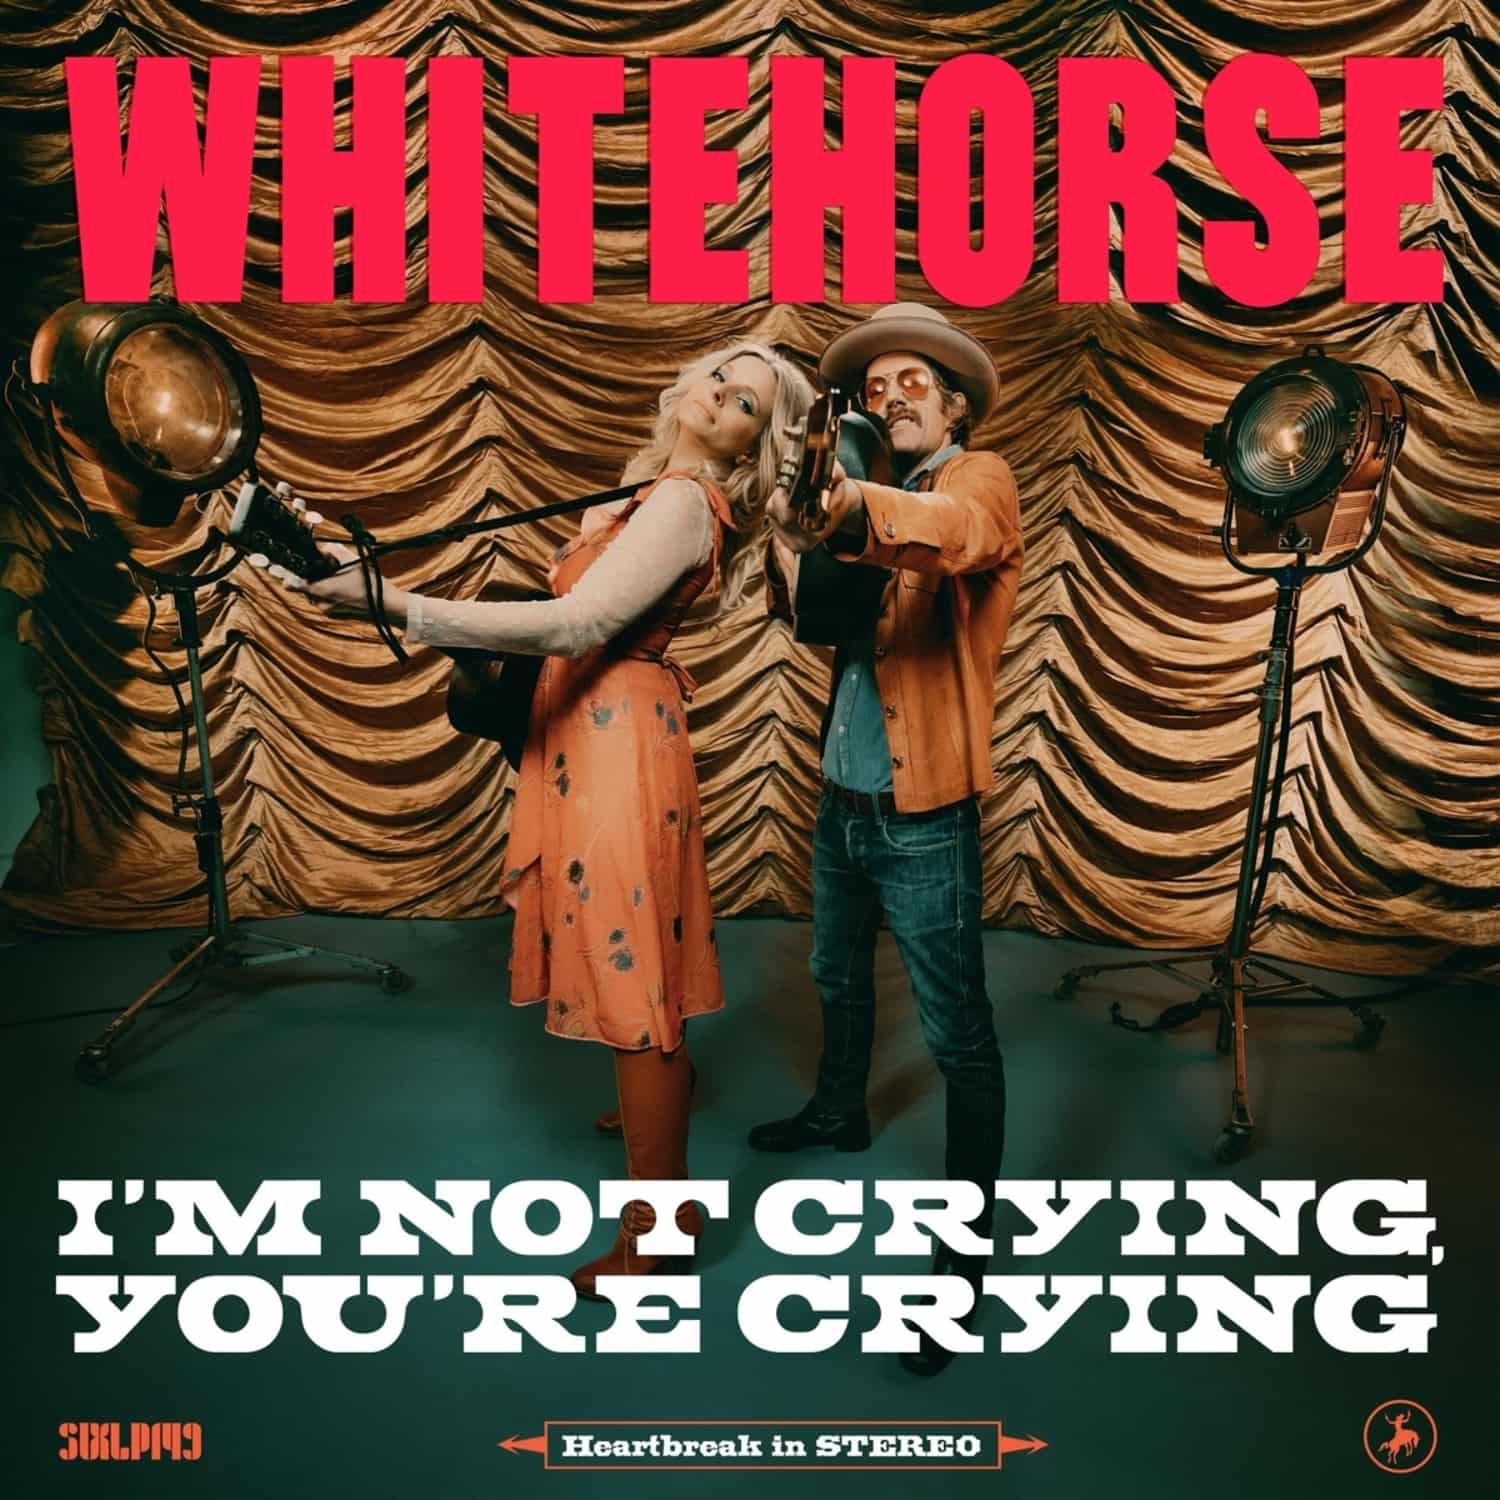 Whitehorse - I M NOT CRYING, YOU RE CRYING 